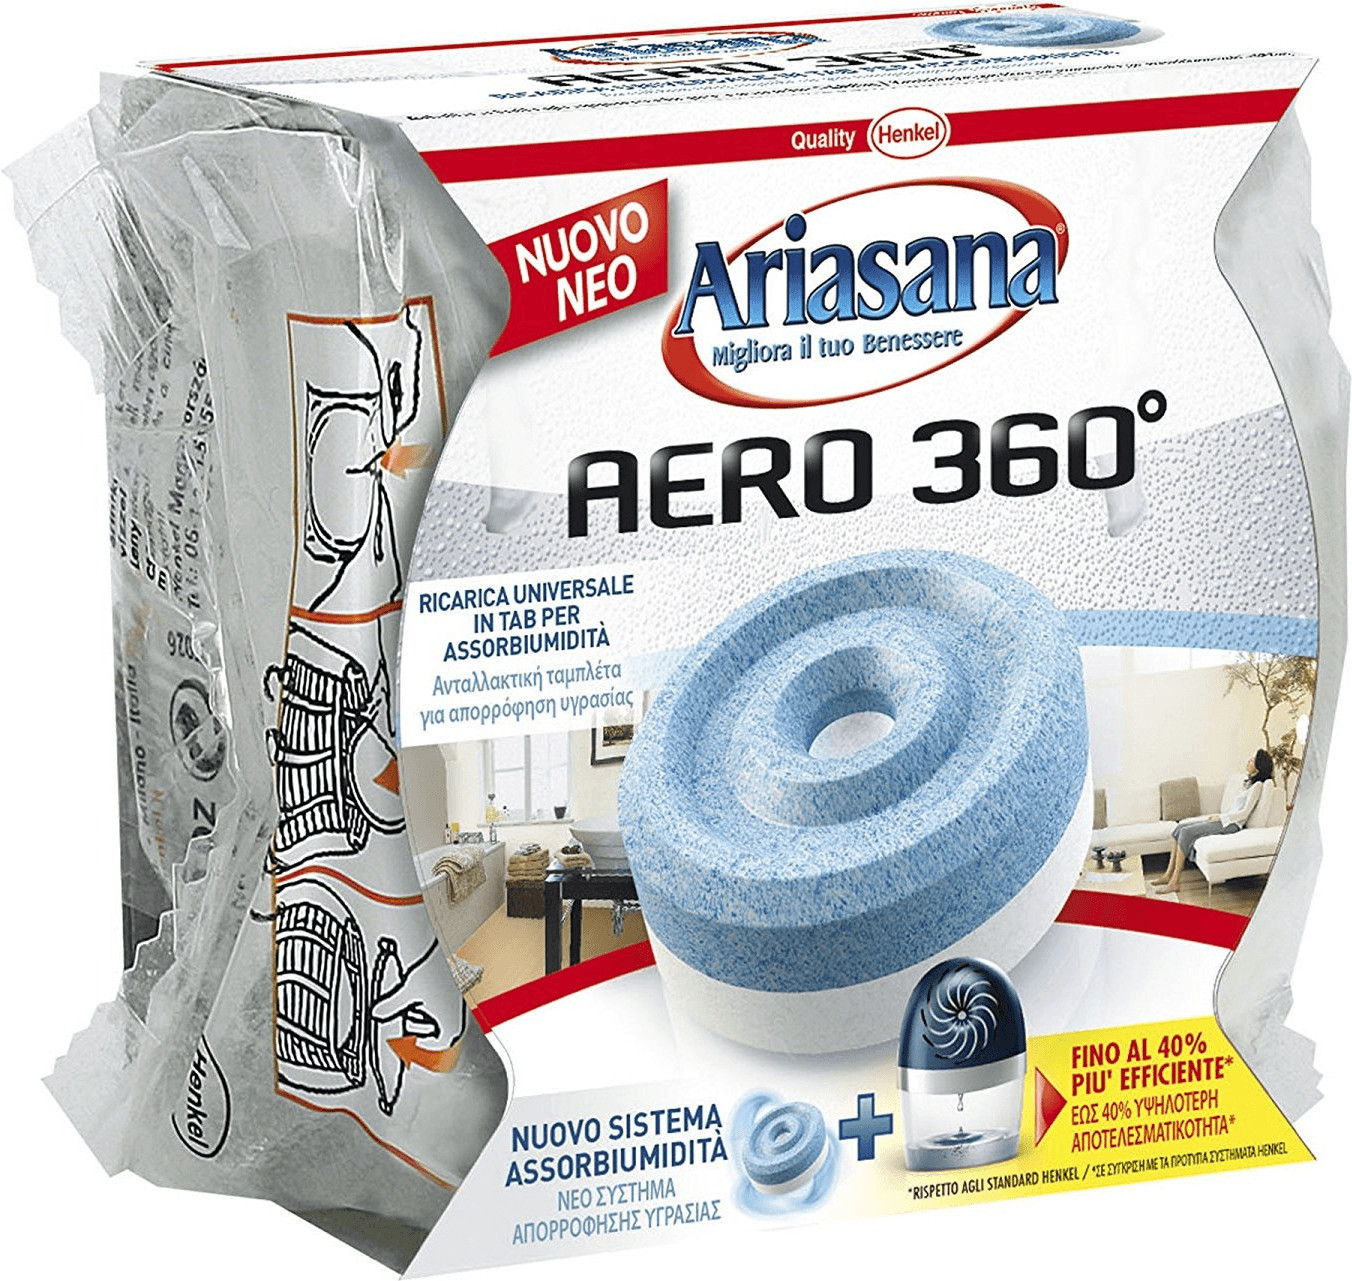 Ariasana Aero 360° Tab Pure Ricarica Universale in Tab per Assorbiumudità  450 g